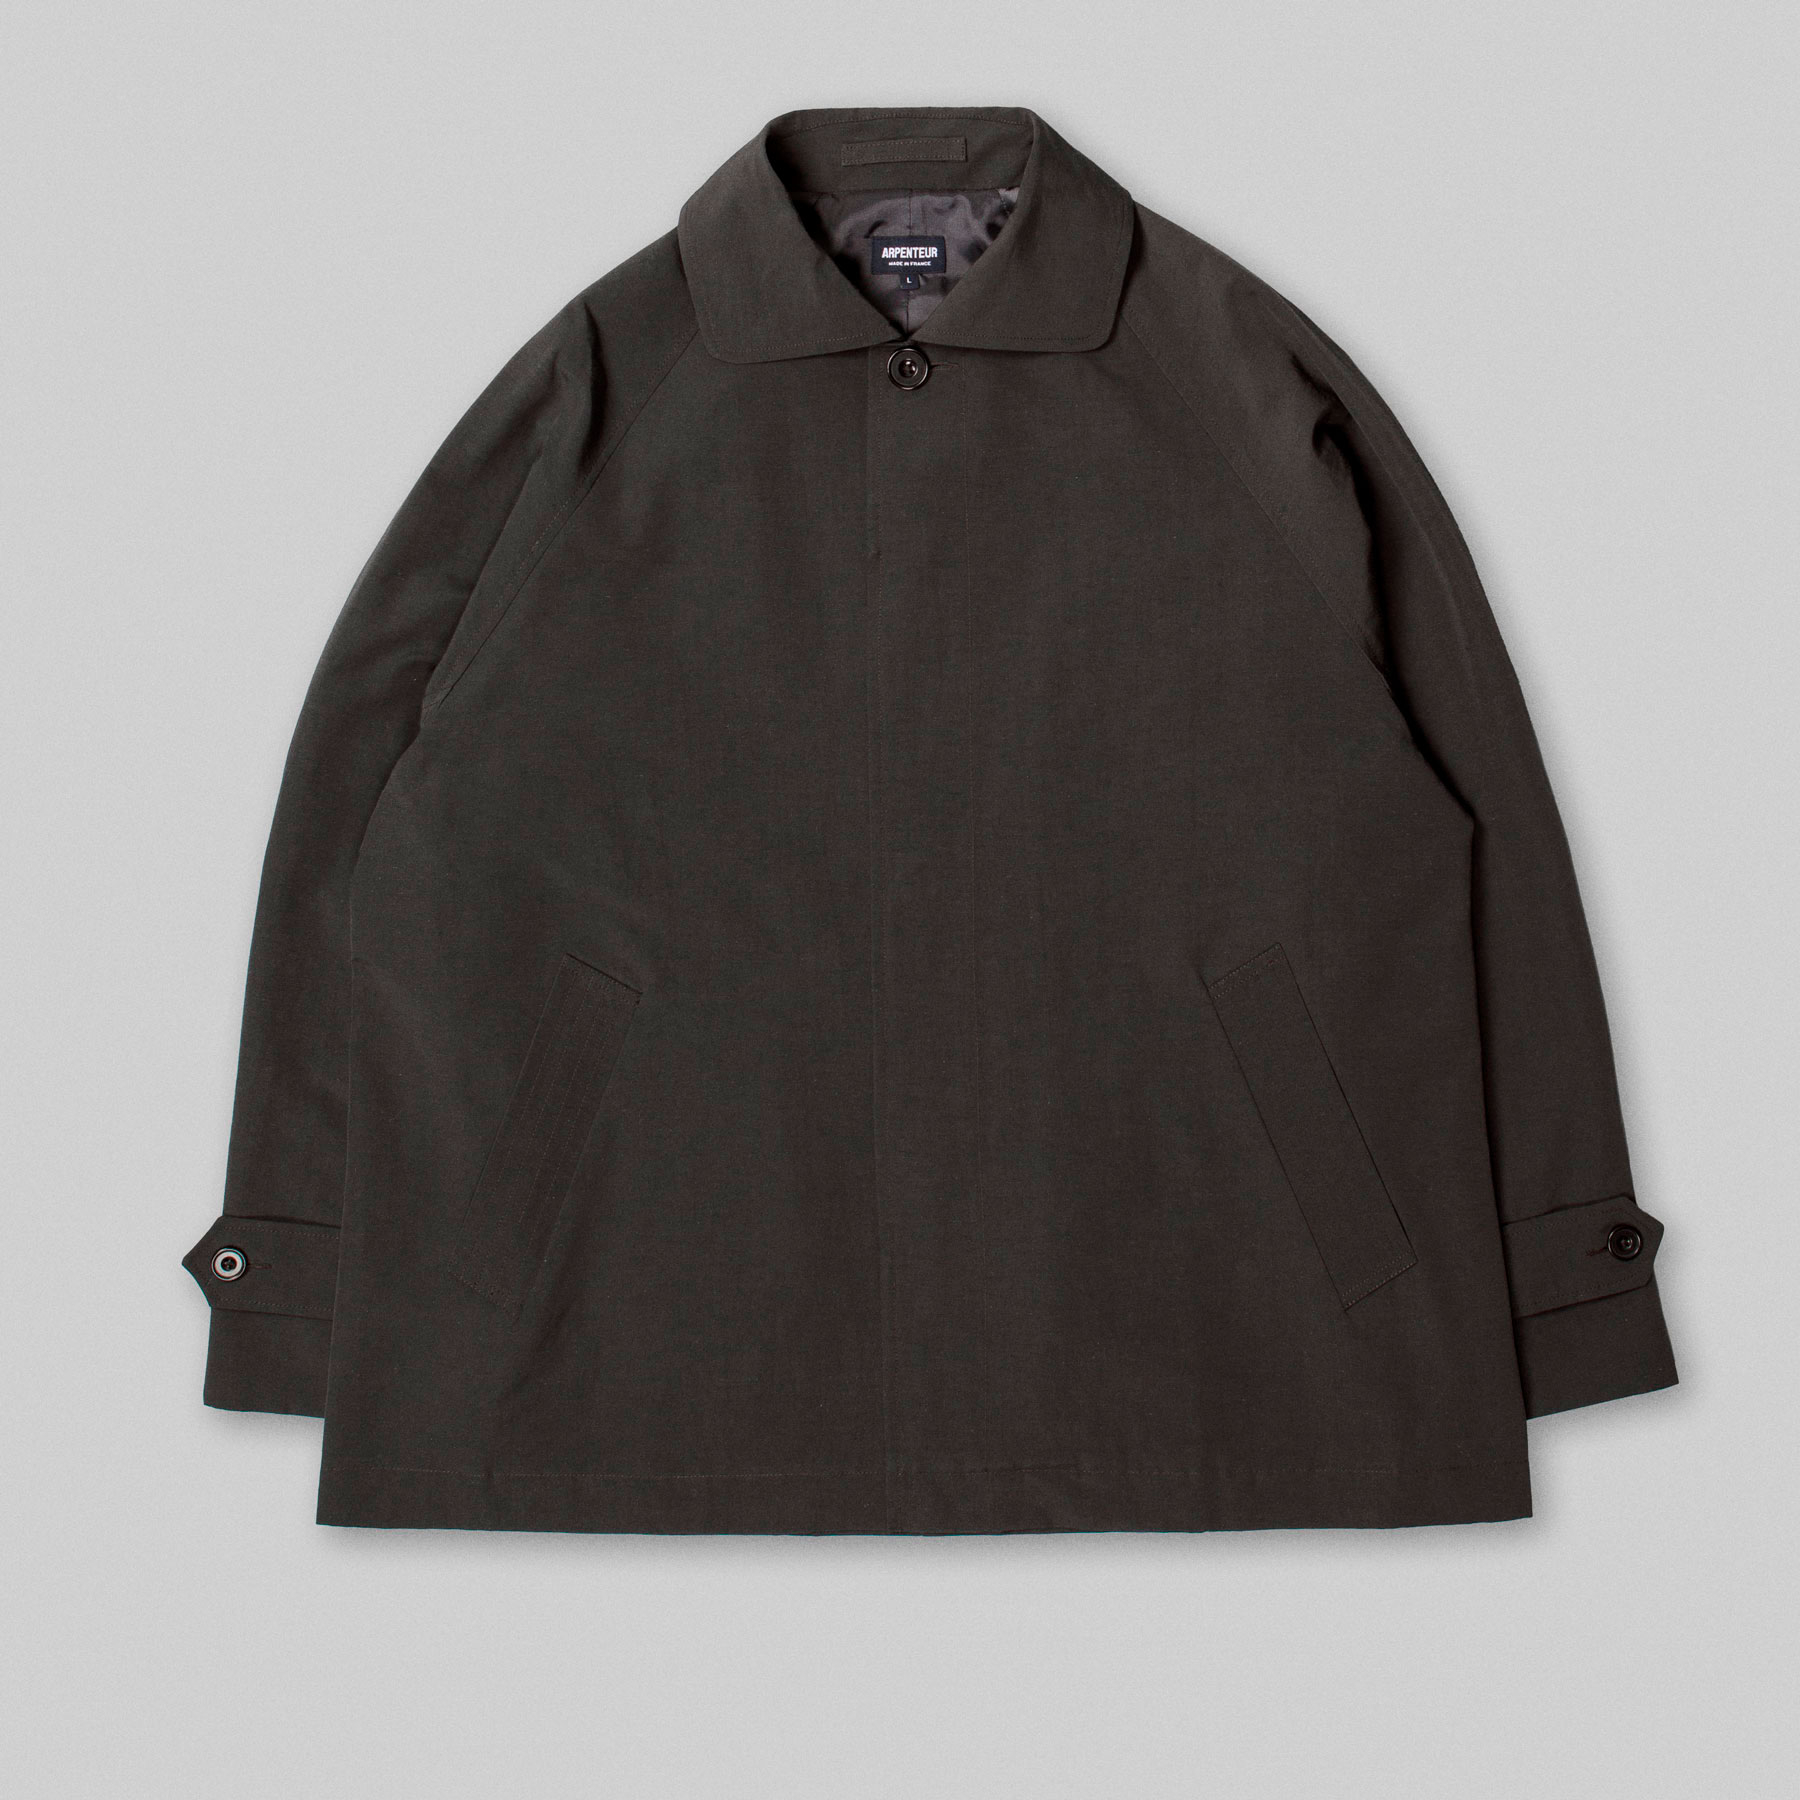 UTILE overcoat in Charcoal by Arpenteur